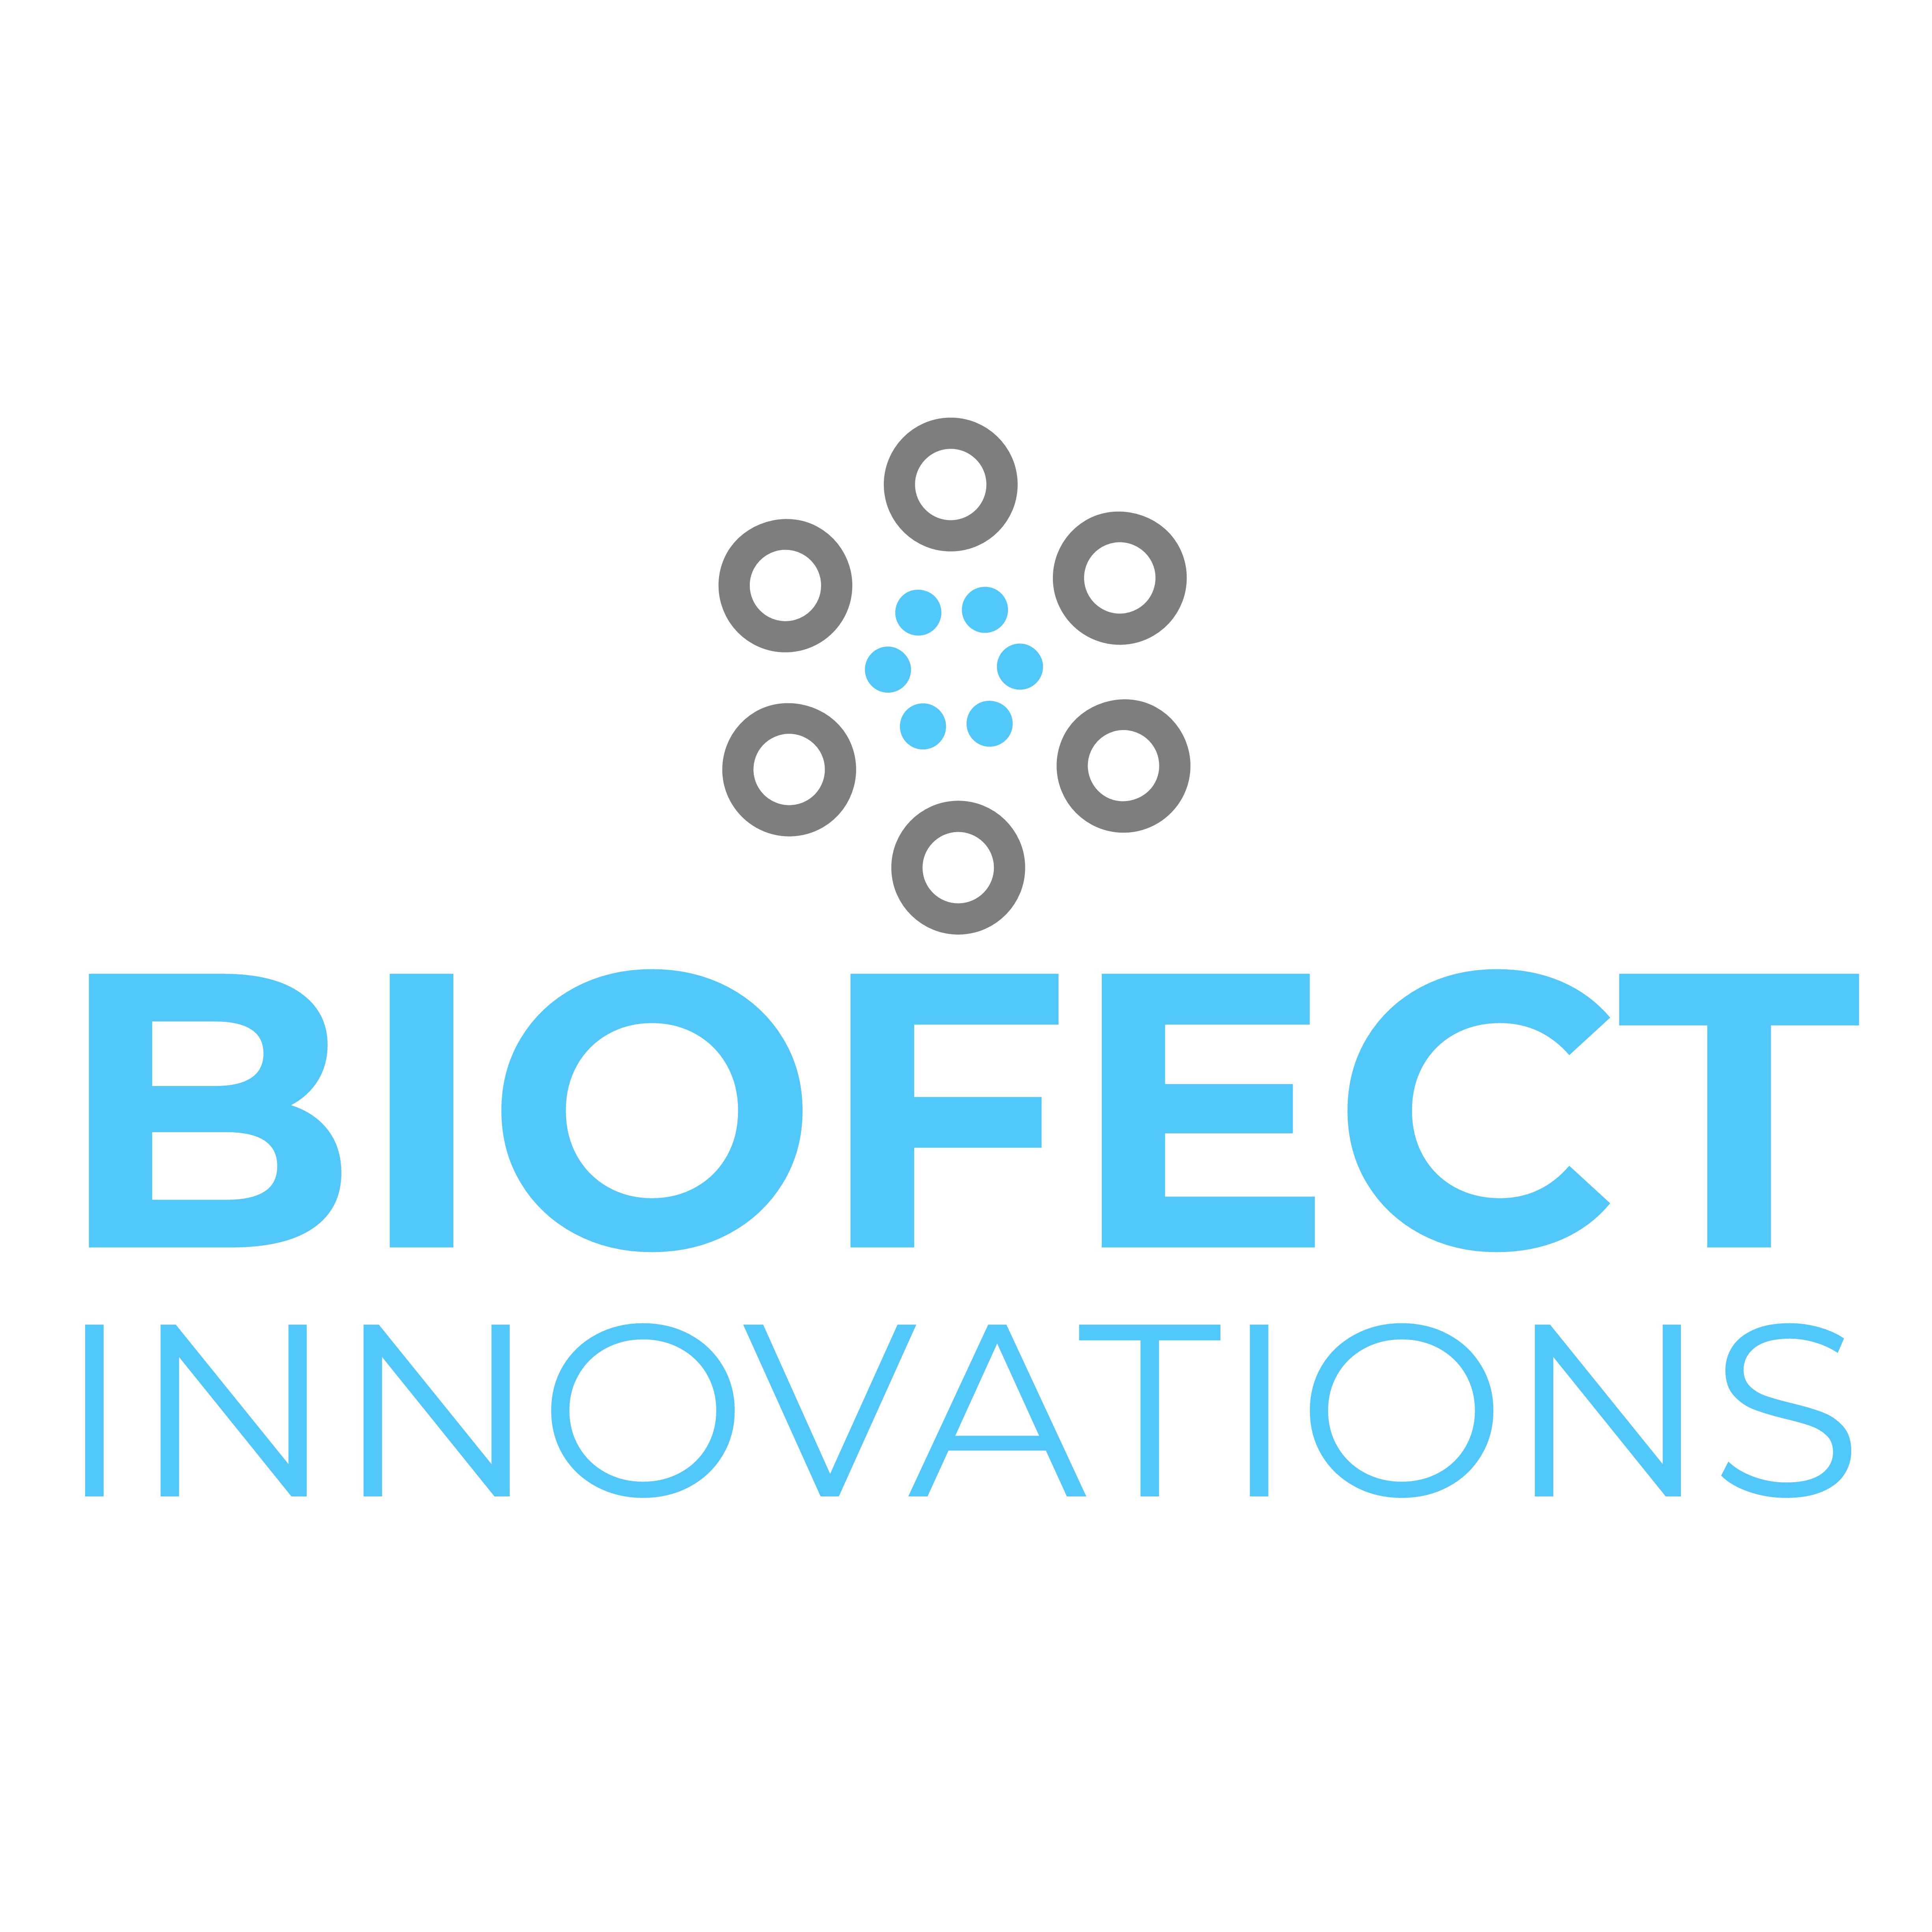 Biofect Innovations